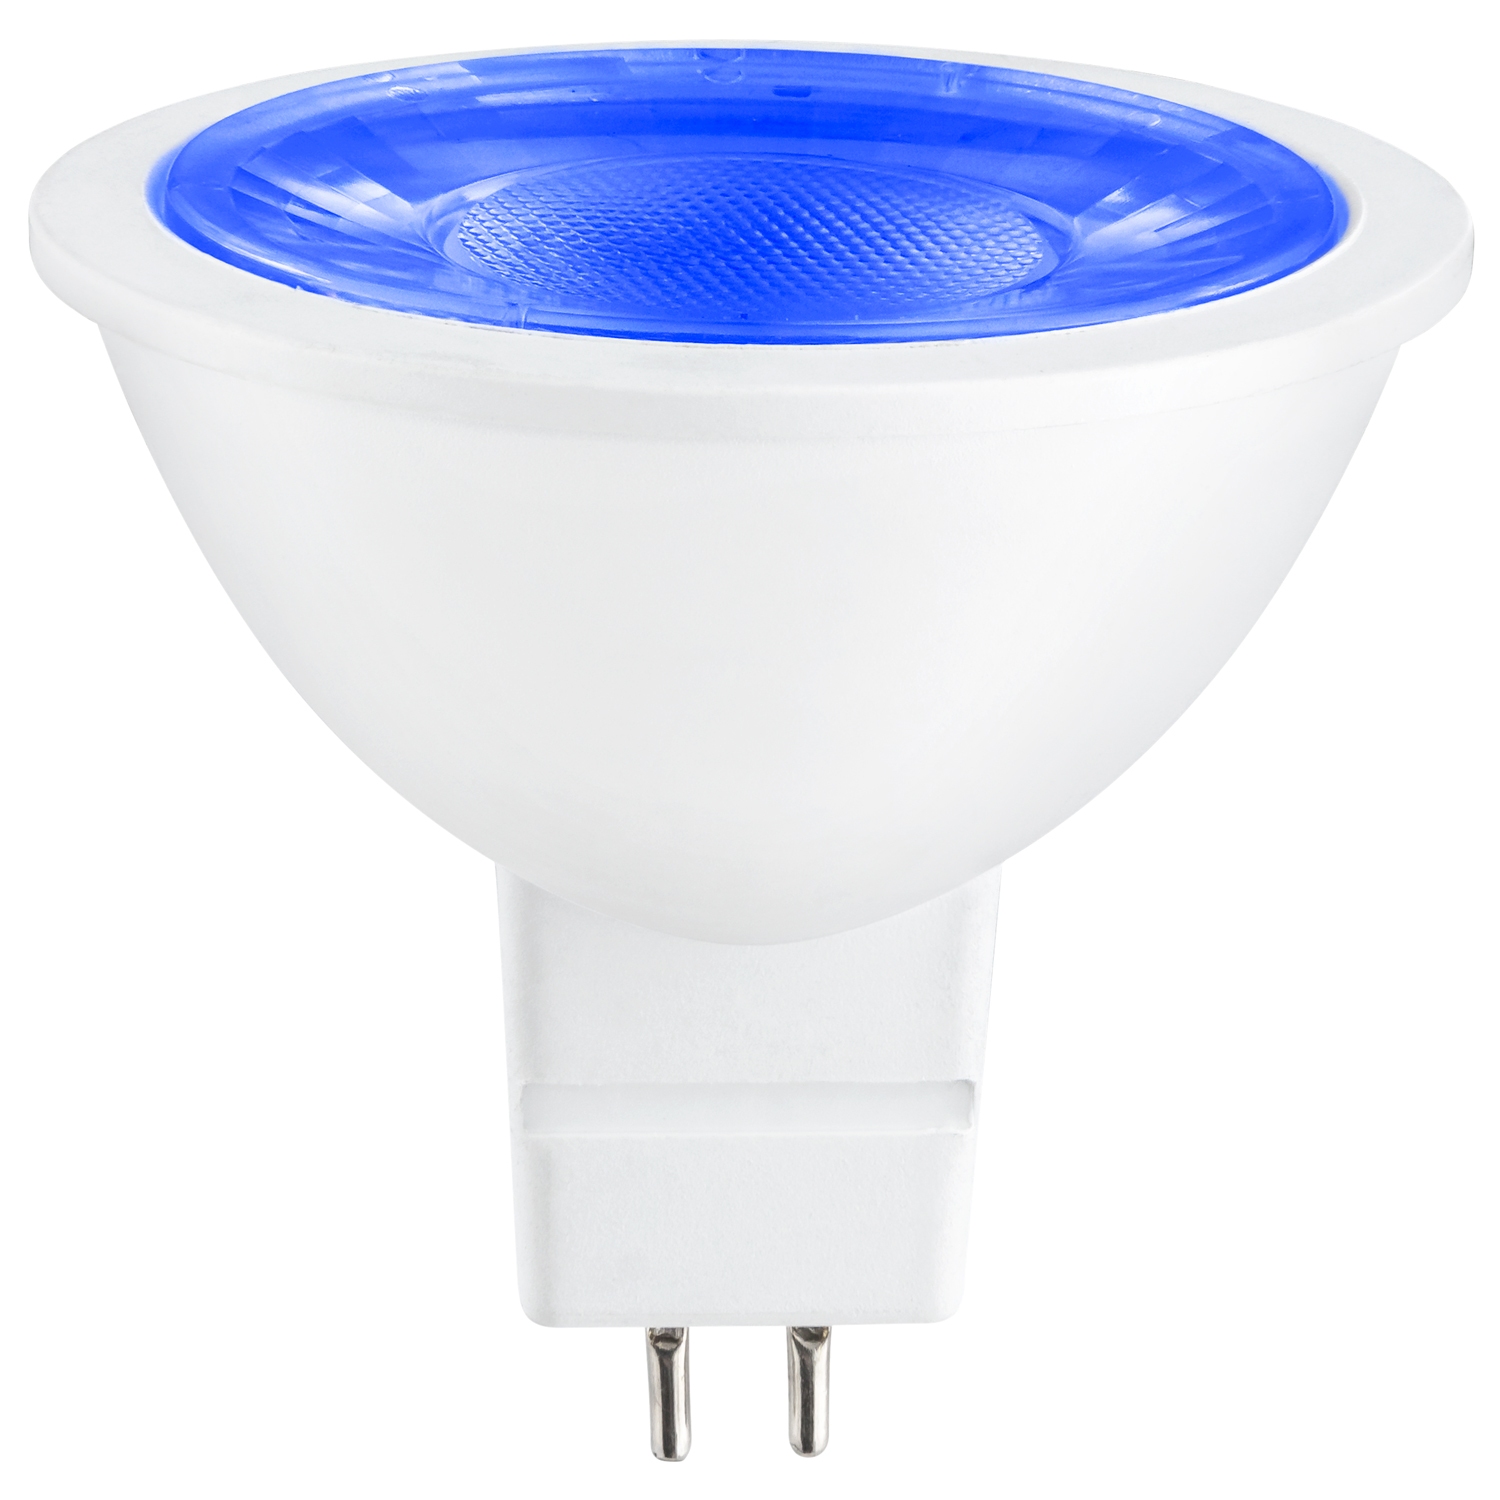 LED MR16 Light Bulb GU5.3 25-Watt Equivalent, Blue